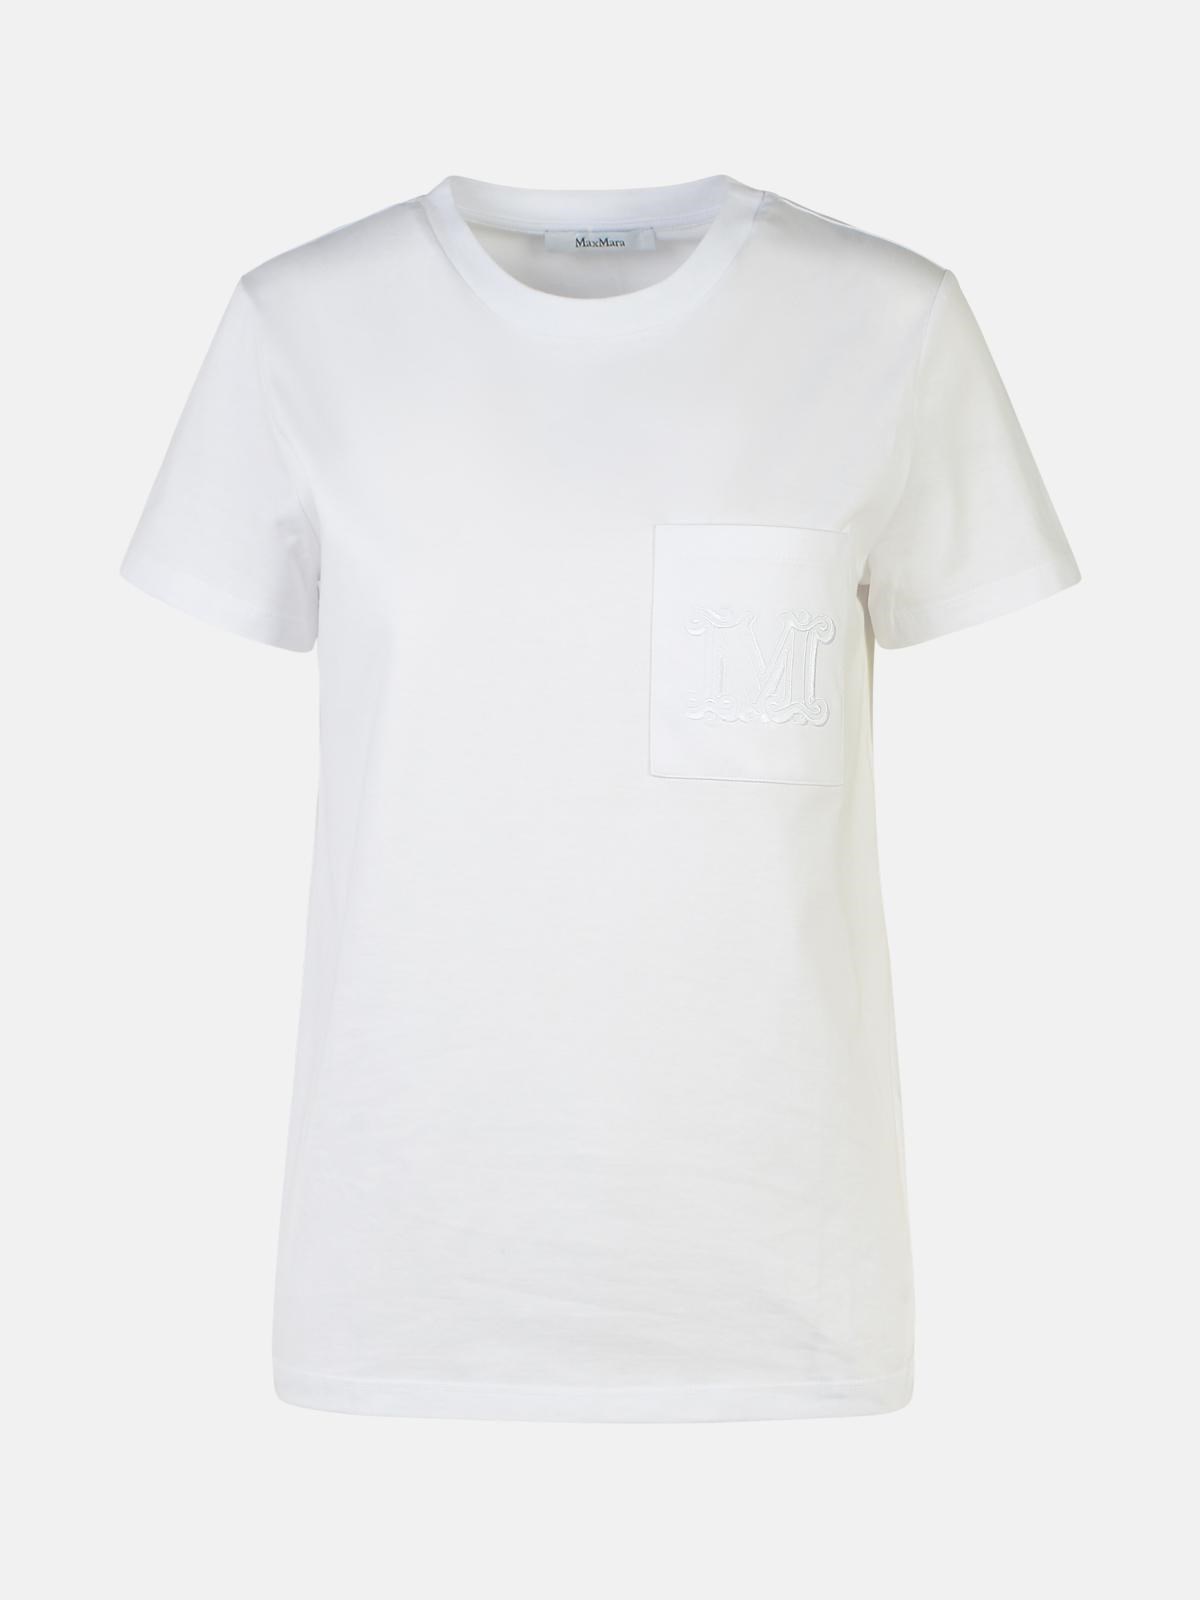 Max Mara 'papaia' White Cotton T-shirt